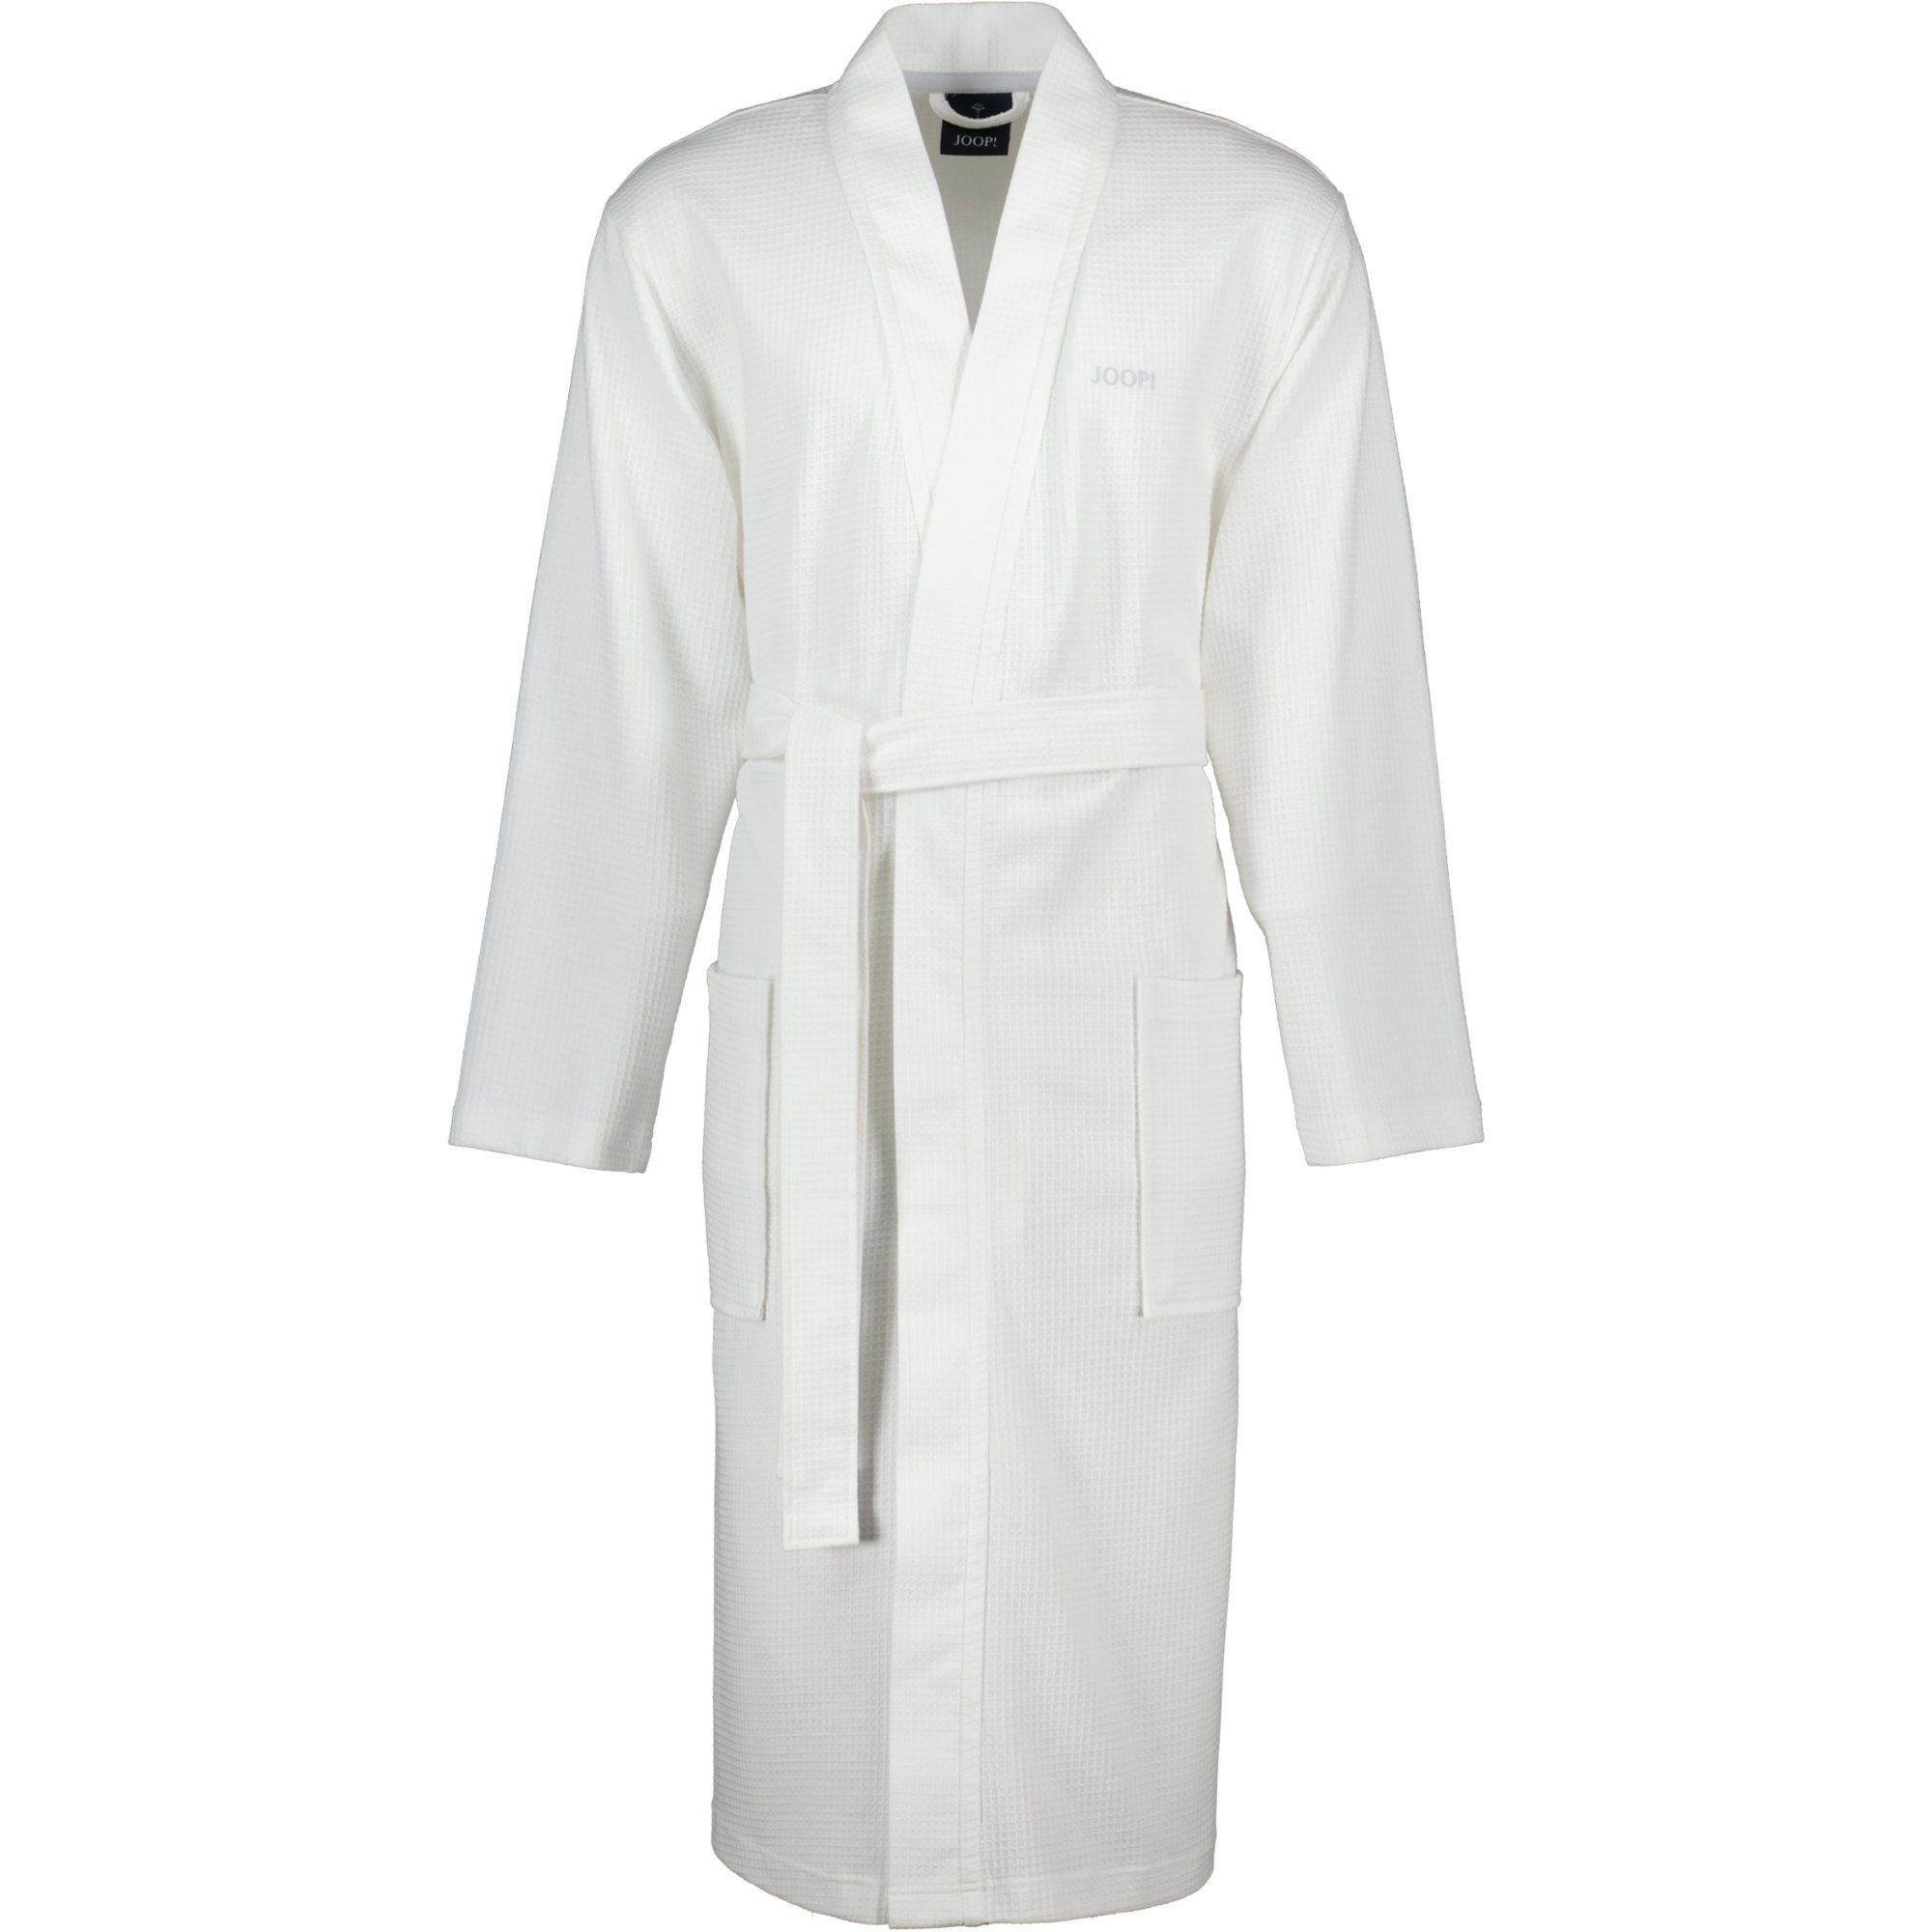 Joop! Herrenbademantel Pique 1656 Kimono Pique, Kimono, 100% Baumwolle Weiß (600)